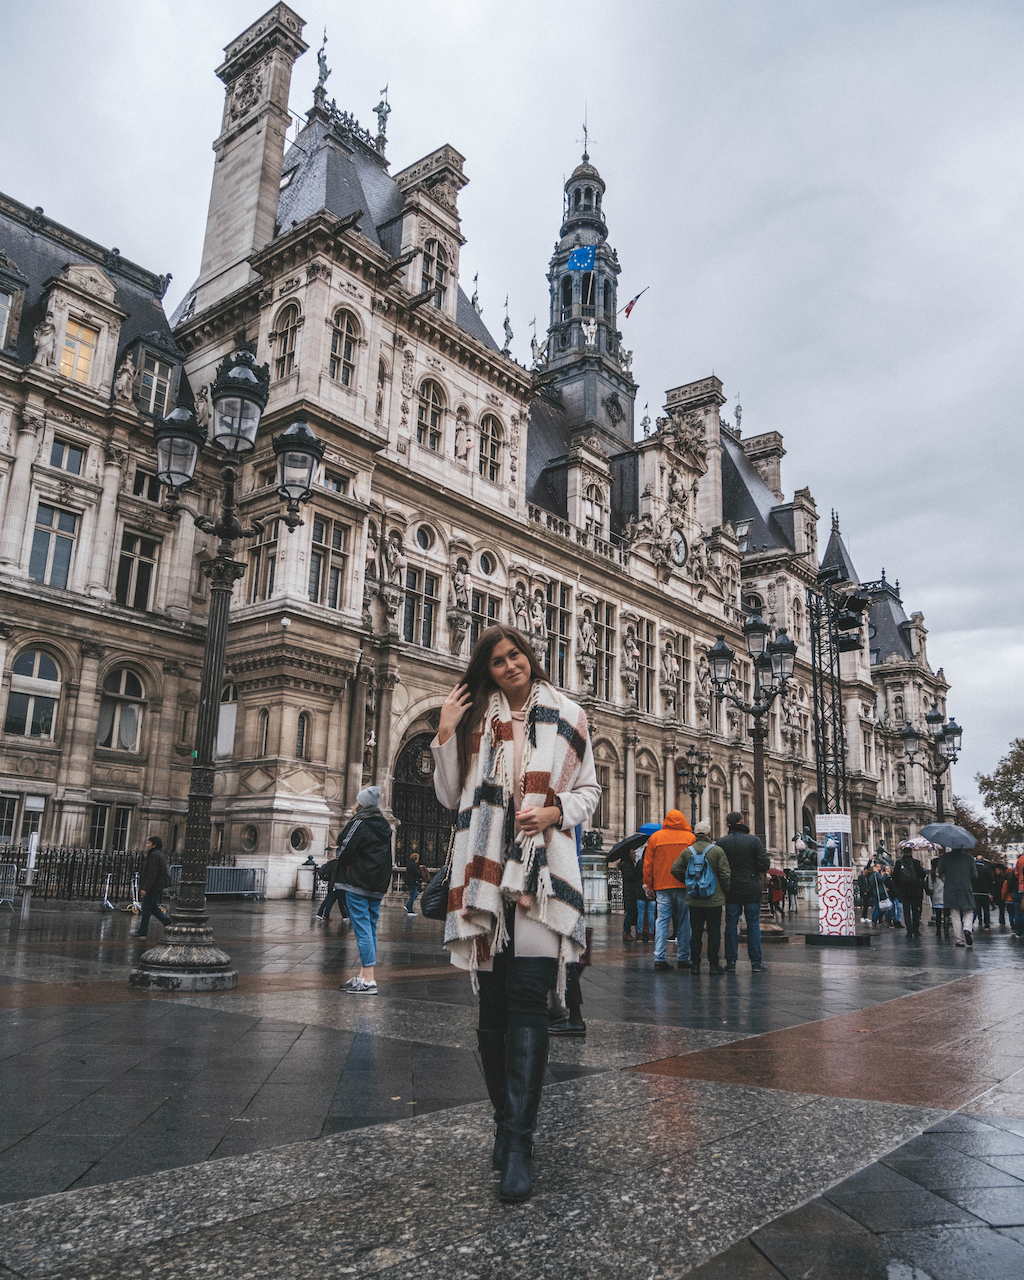 Stunning facade of Hotel de Ville on a rainy day - Paris - France